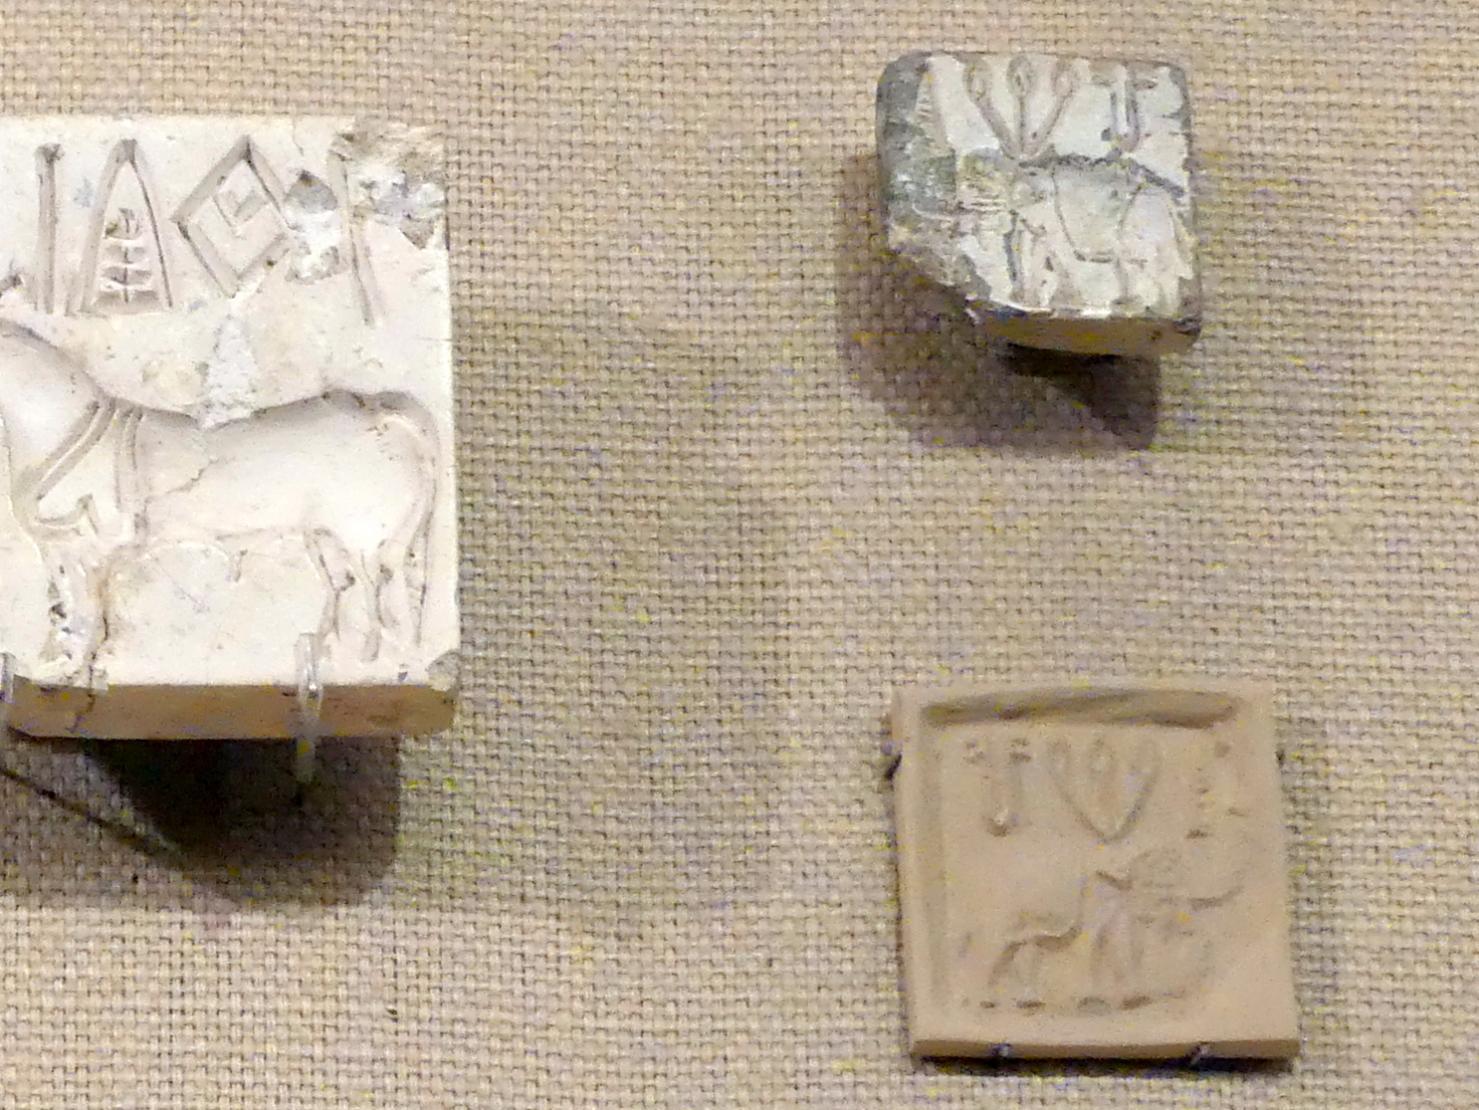 Stempelsiegel und moderner Abdruck: Elefant, Harappan 3, 2600 - 1900 v. Chr., 2600 - 1900 v. Chr., Bild 1/2